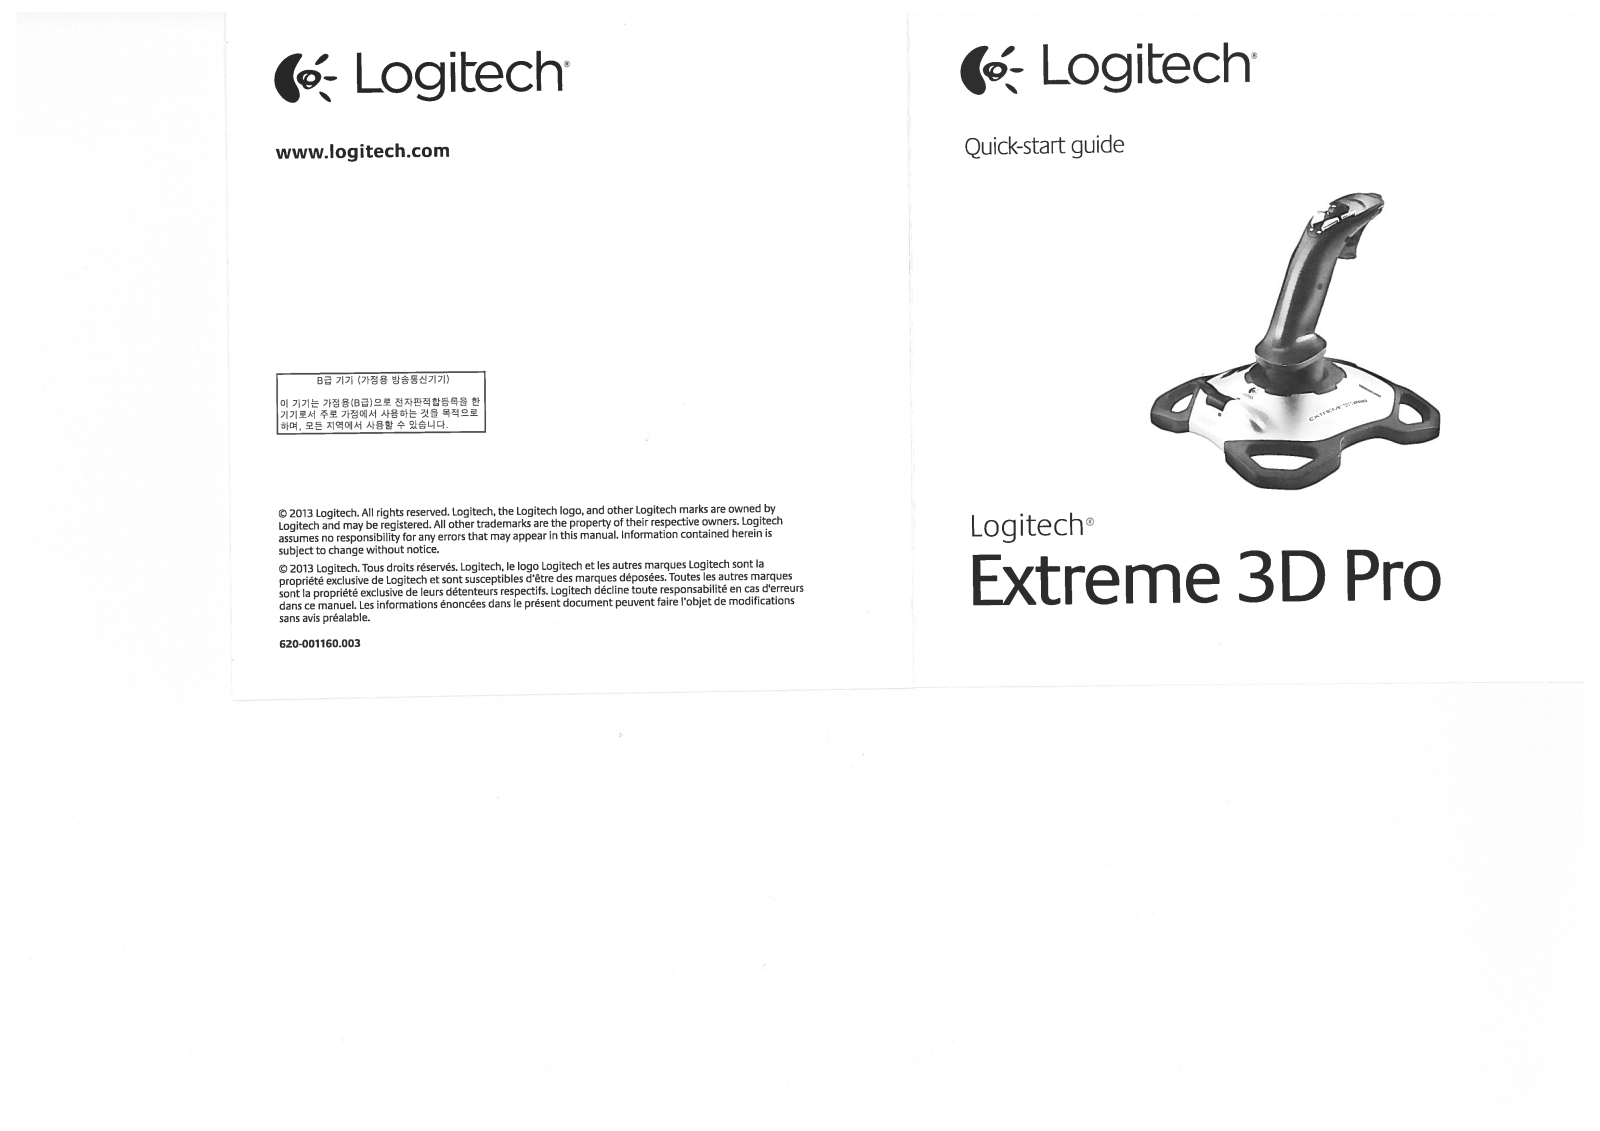 Logitech Extreme 3d Pro Quick Start Guide